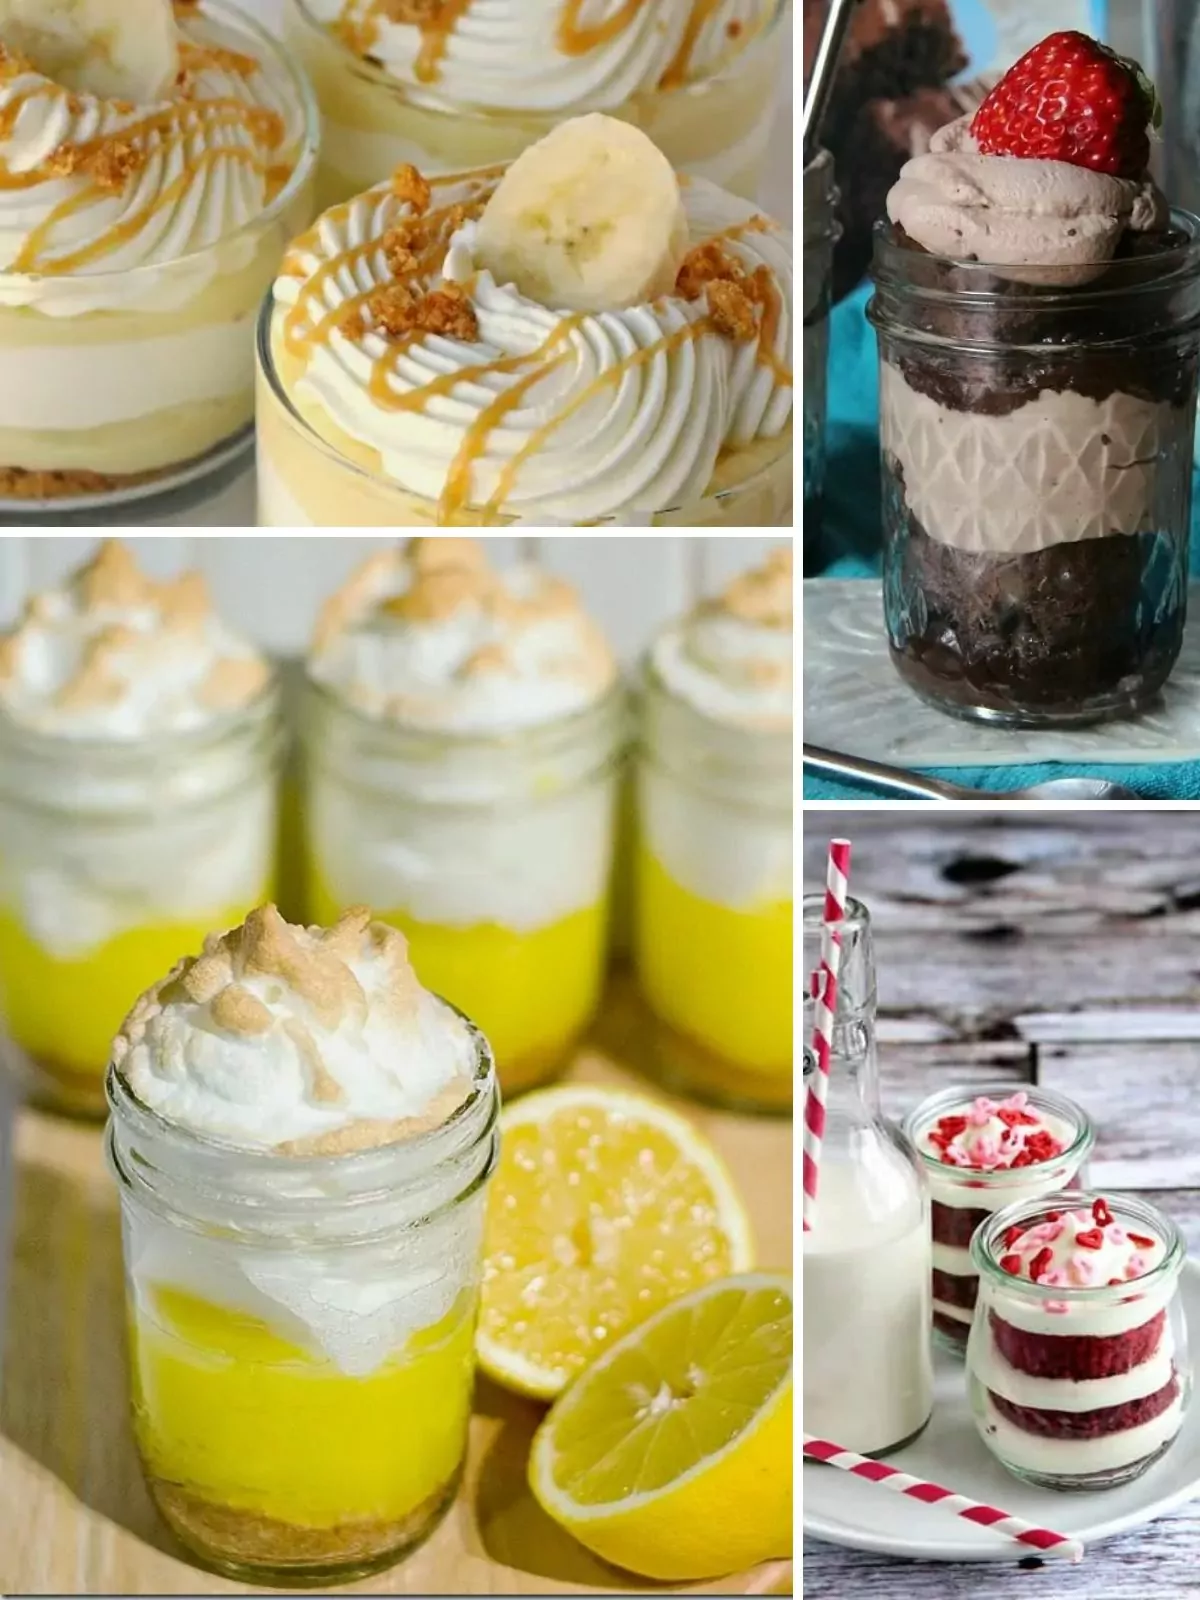 Desserts in Jars with red velvet, chocolate pudding, lemon meringue and banana cream pie.